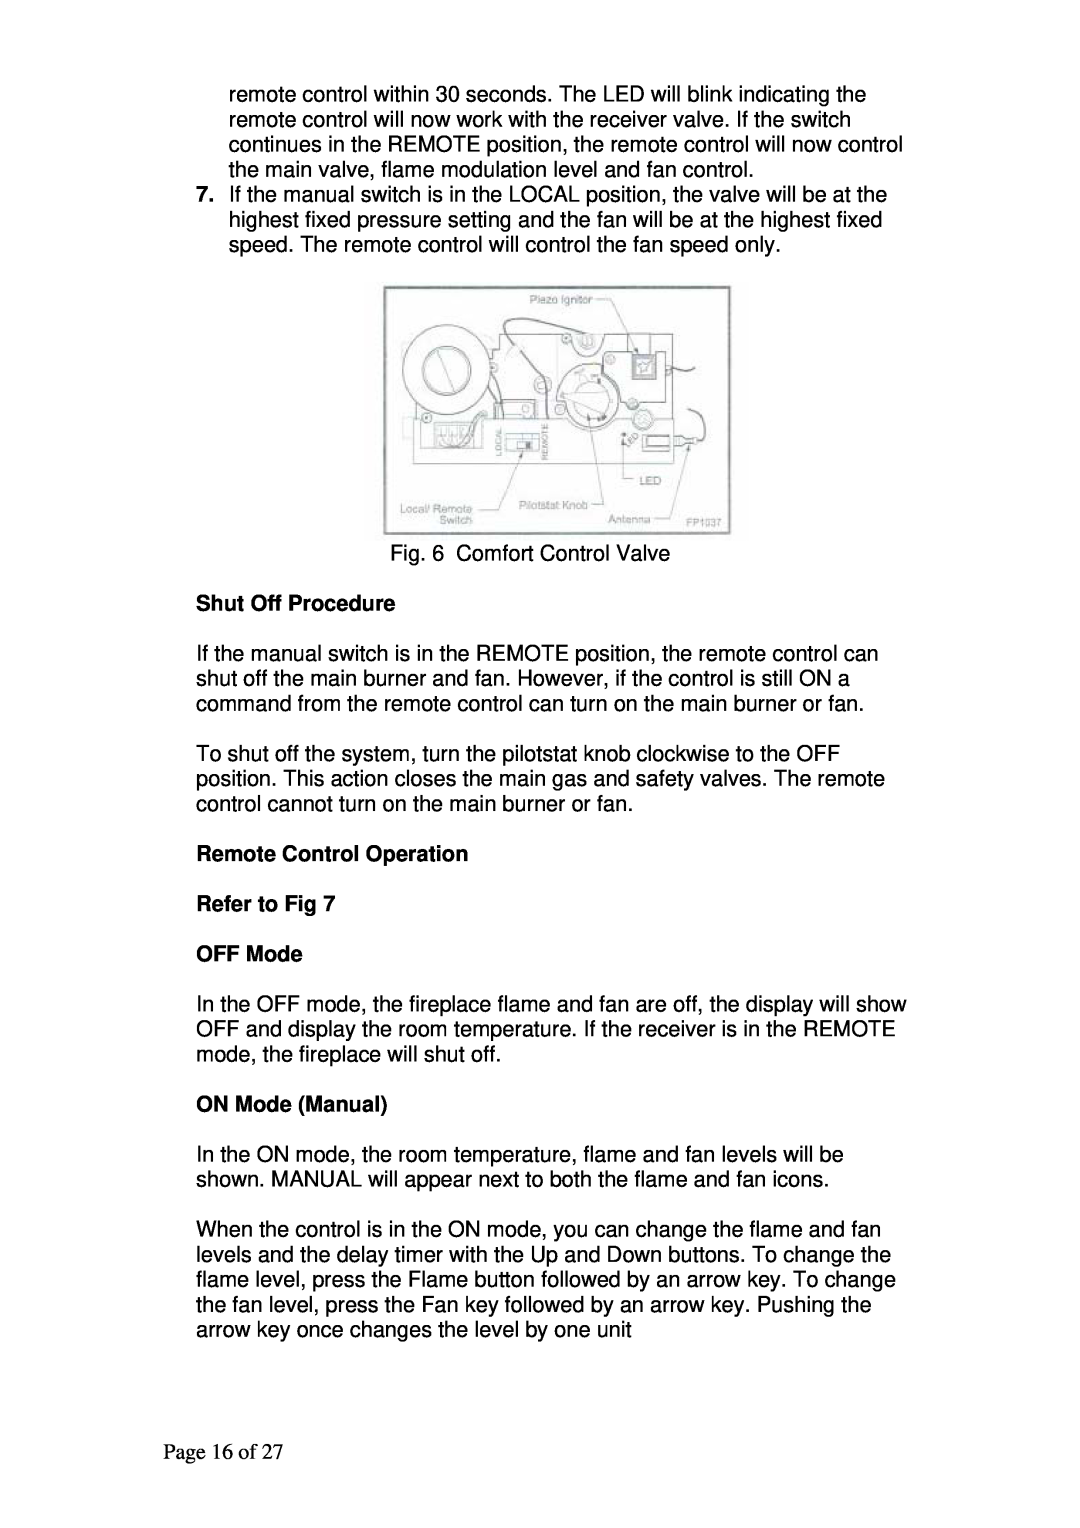 Raypak RFSDV34RFNAU manual Shut Off Procedure, Remote Control Operation Refer to Fig OFF Mode, ON Mode Manual, Page 16 of 